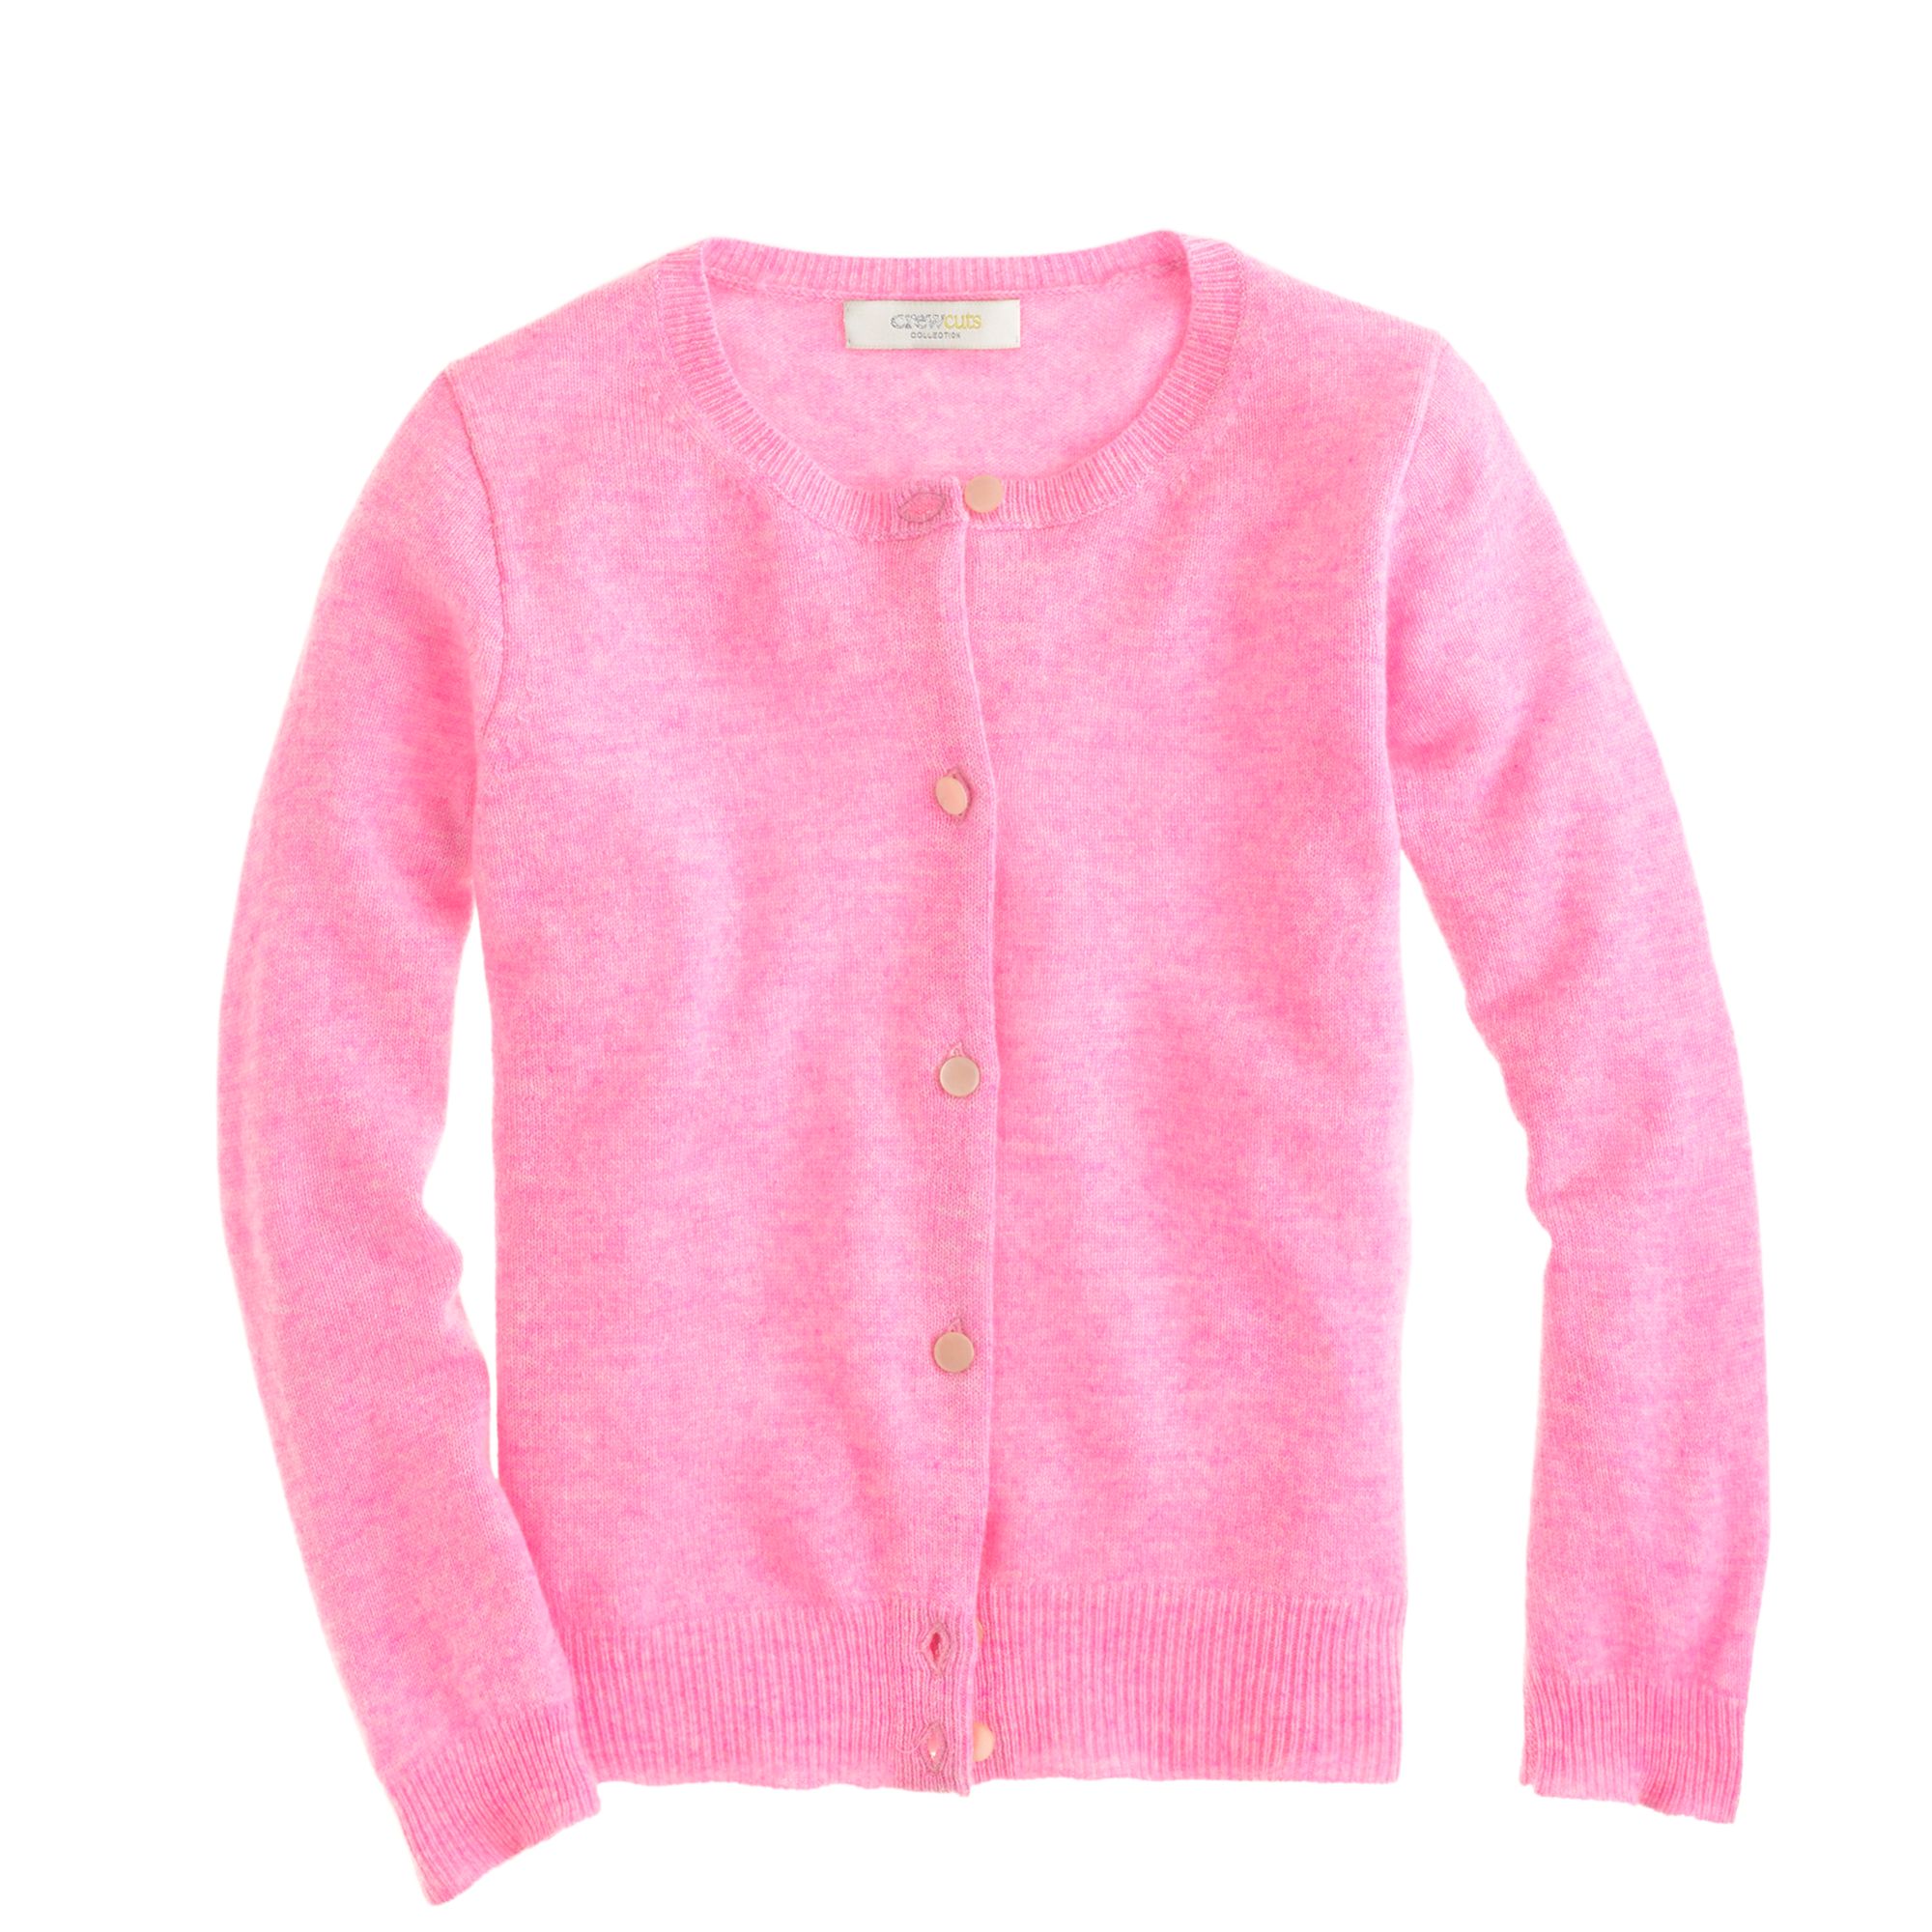 J.crew Girls Collection Cashmere Cardigan in Pink (hthr neon pink) | Lyst